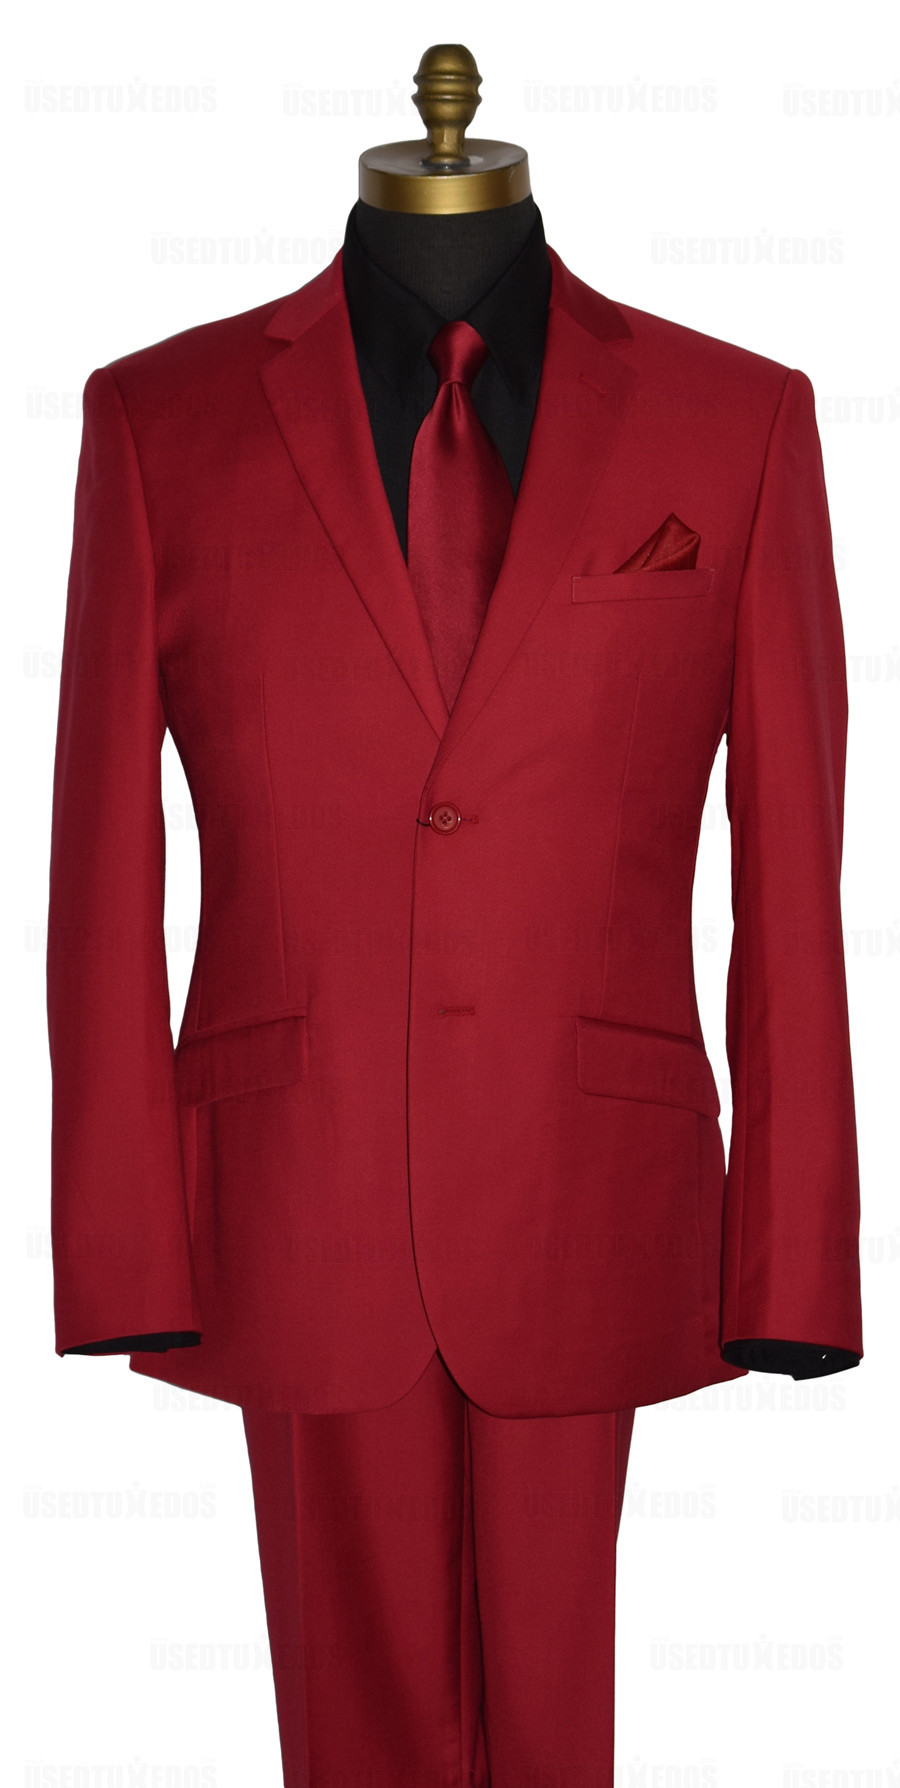 men's red suit 3 piece